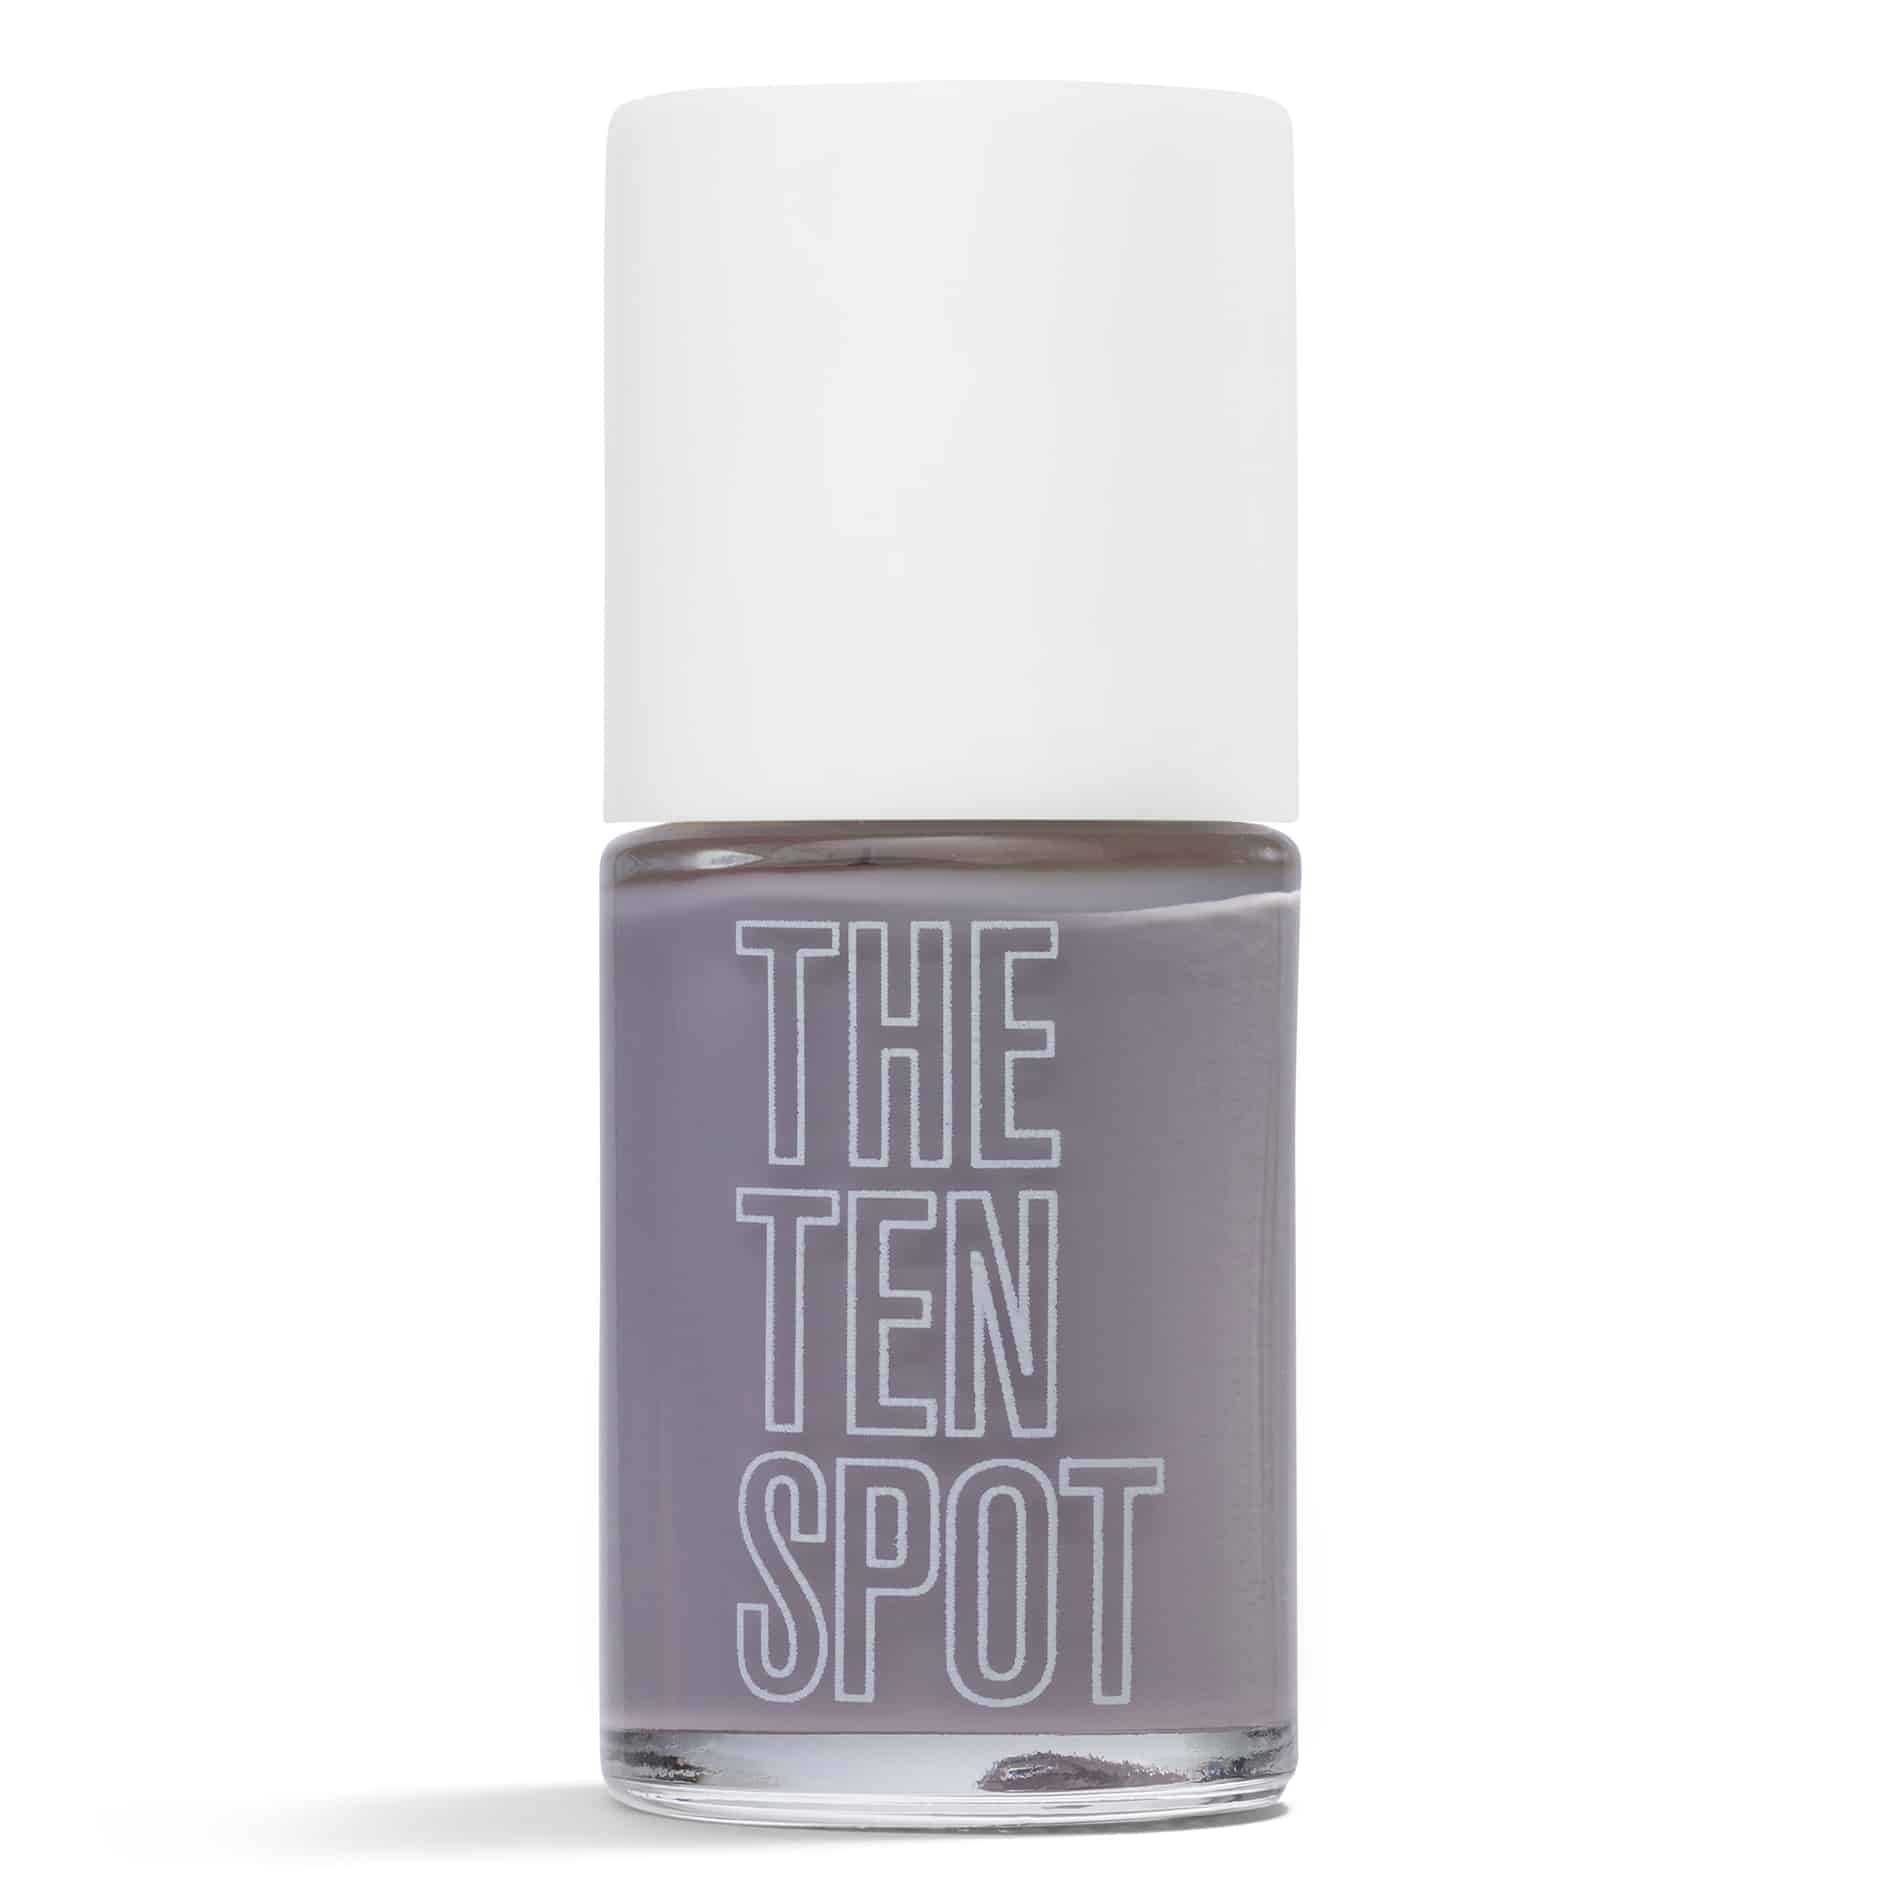 The Ten Spot nail polish